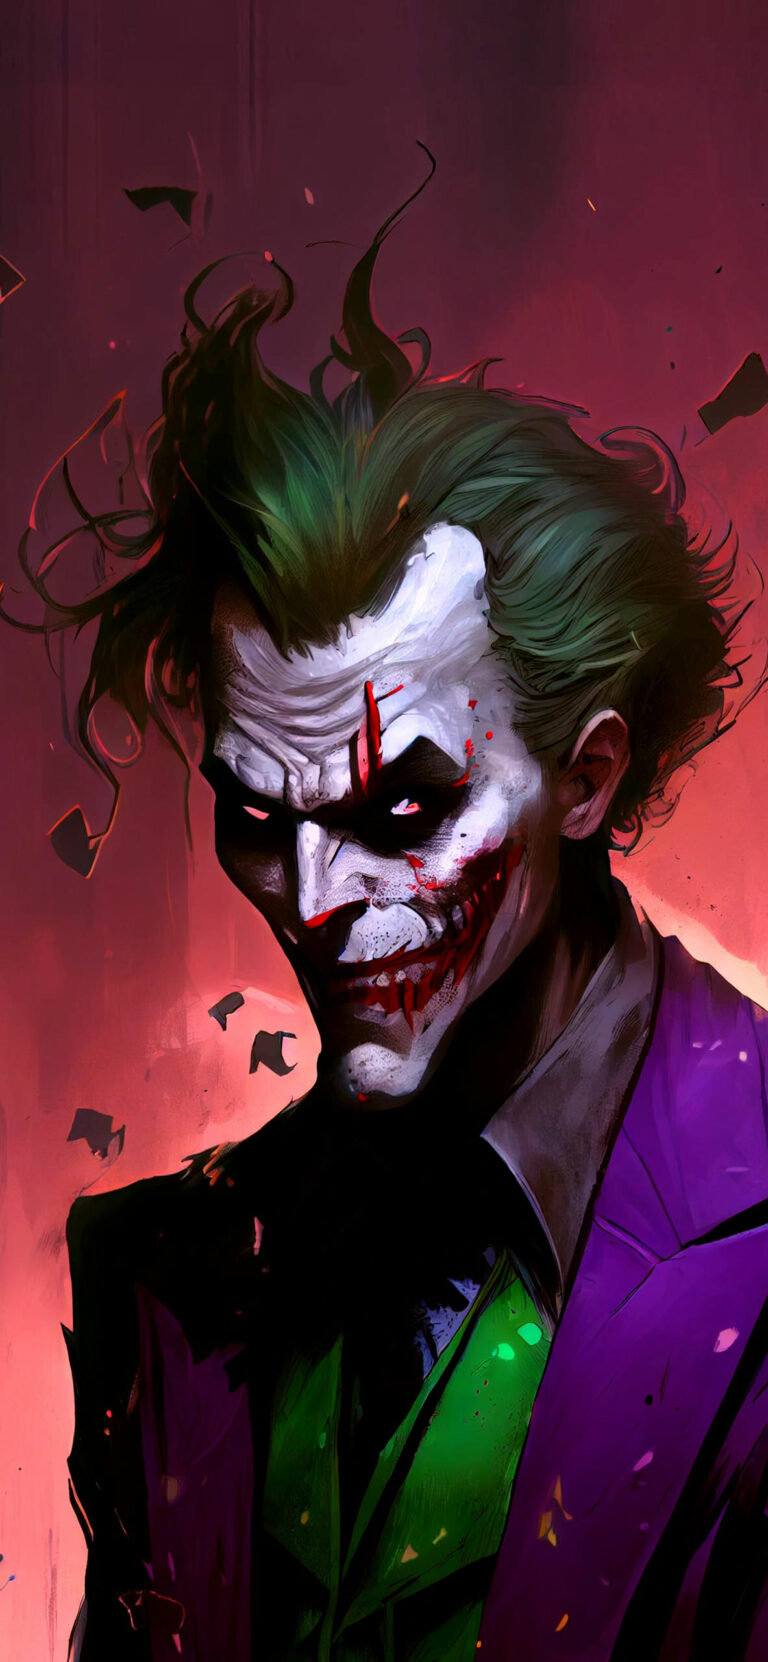 DC Joker Art Wallpapers - Cool DC Comics Wallpapers for iPhone